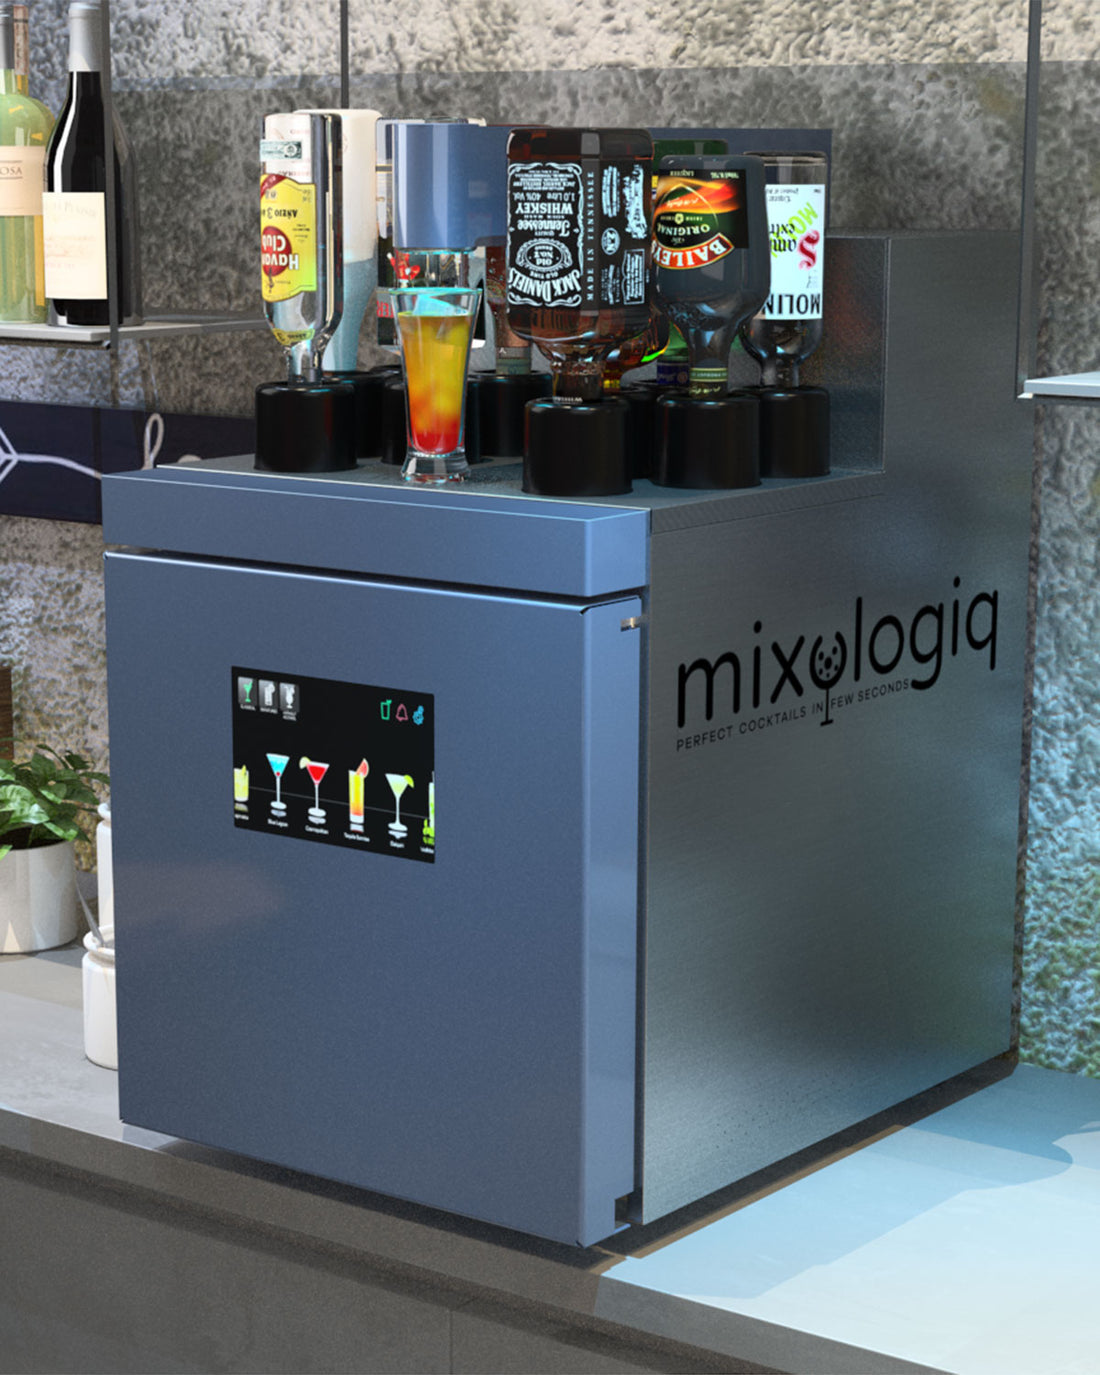 Mixologiq Cocktail Drink Machine: Cocktail Picks